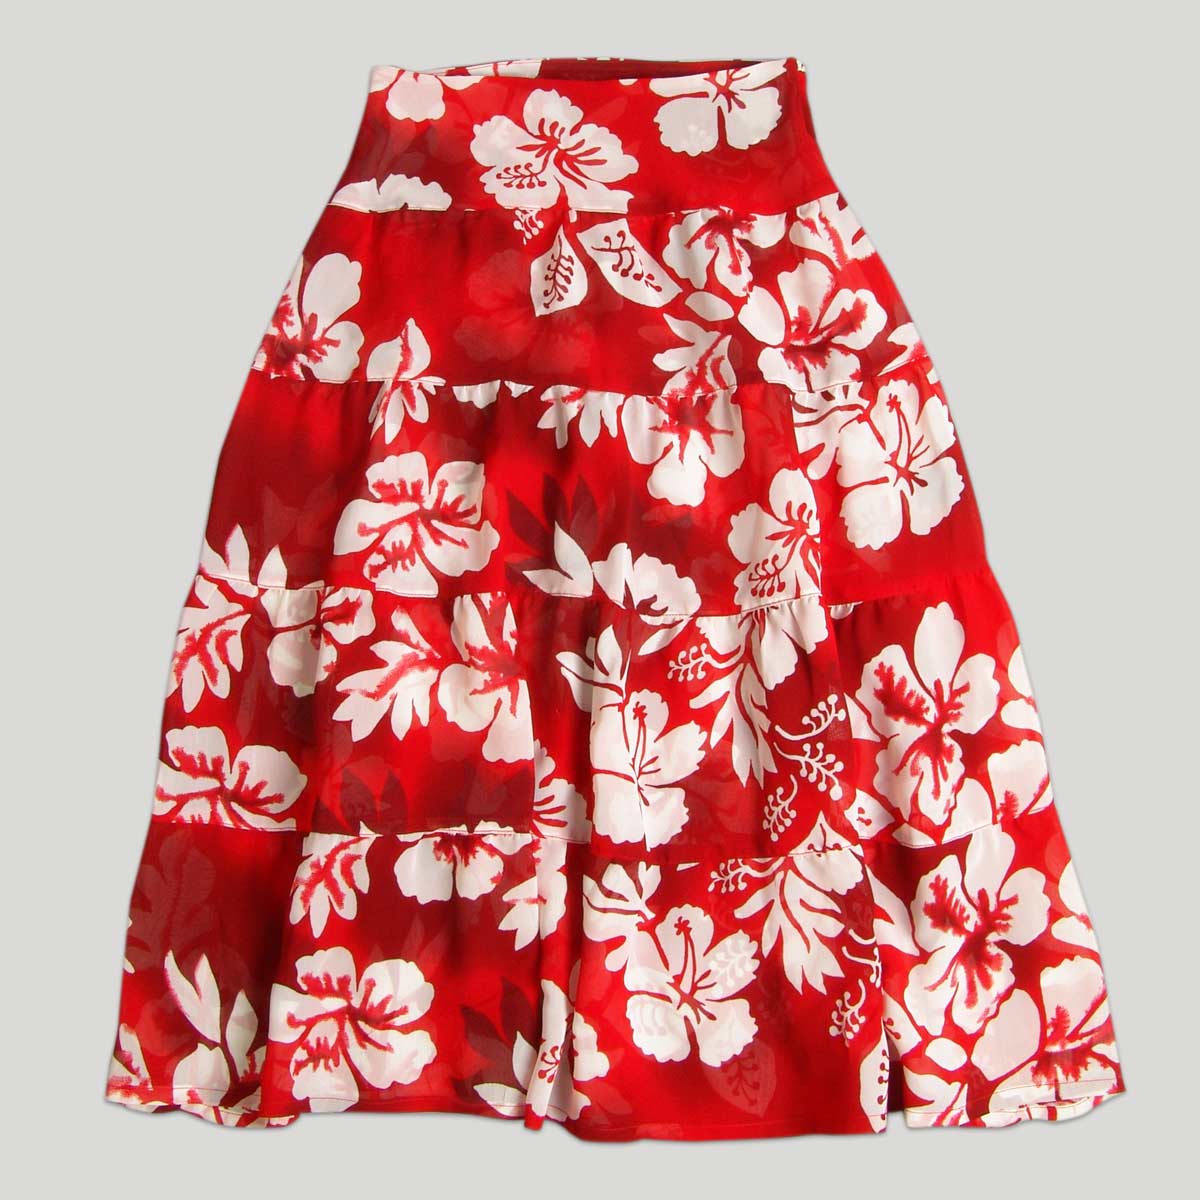 Women's Long Skirt with ruffles